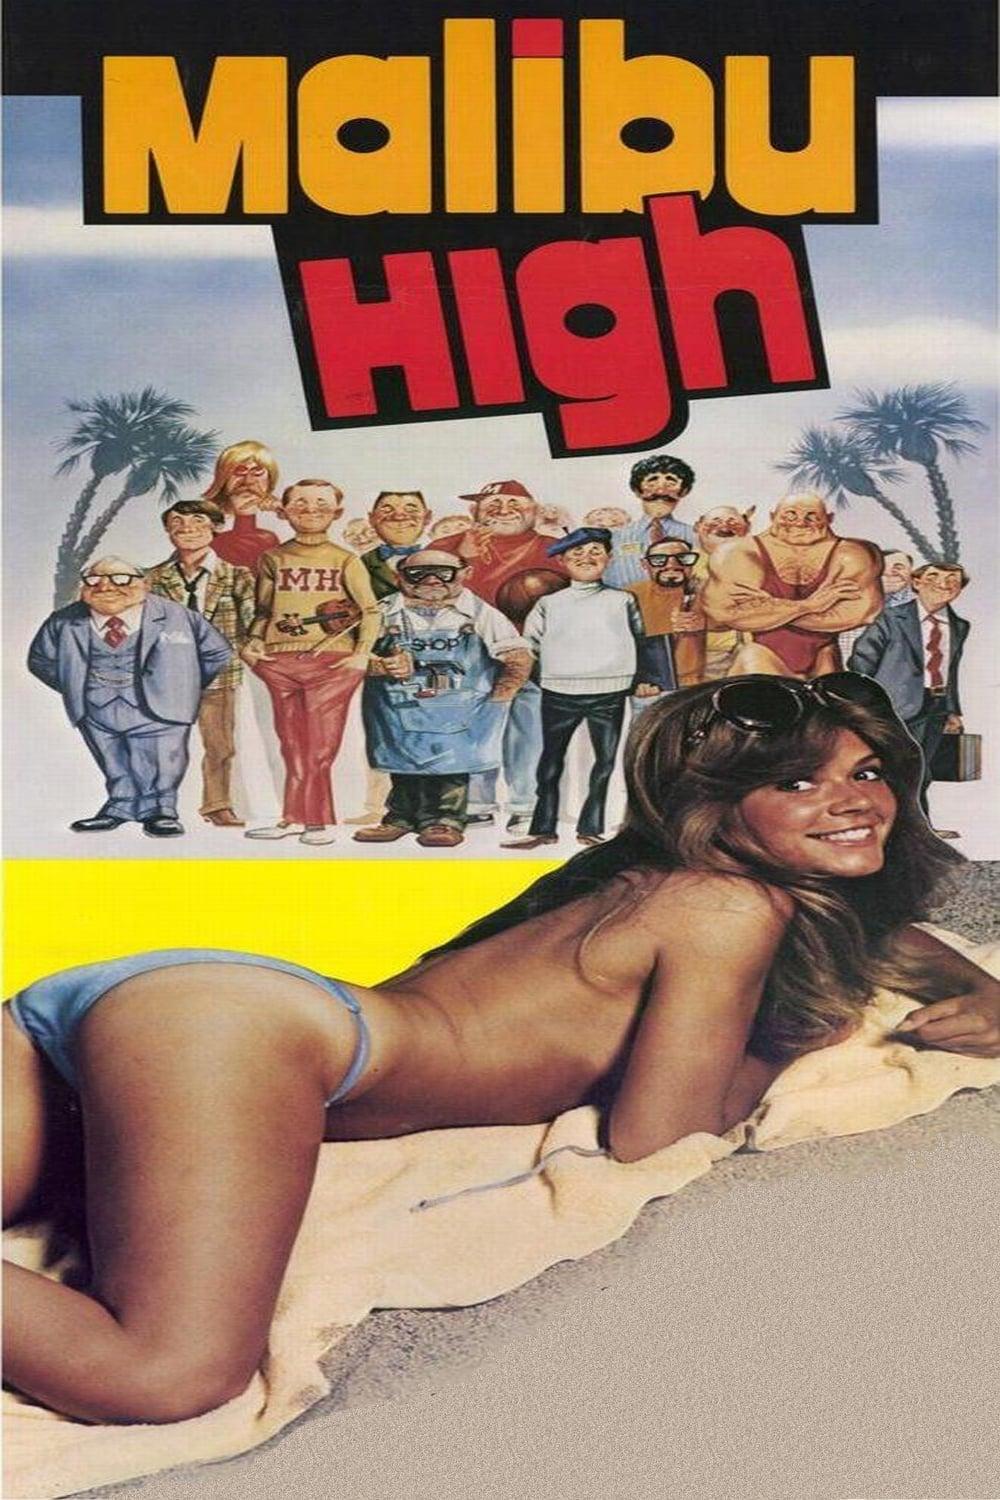 Malibu High poster